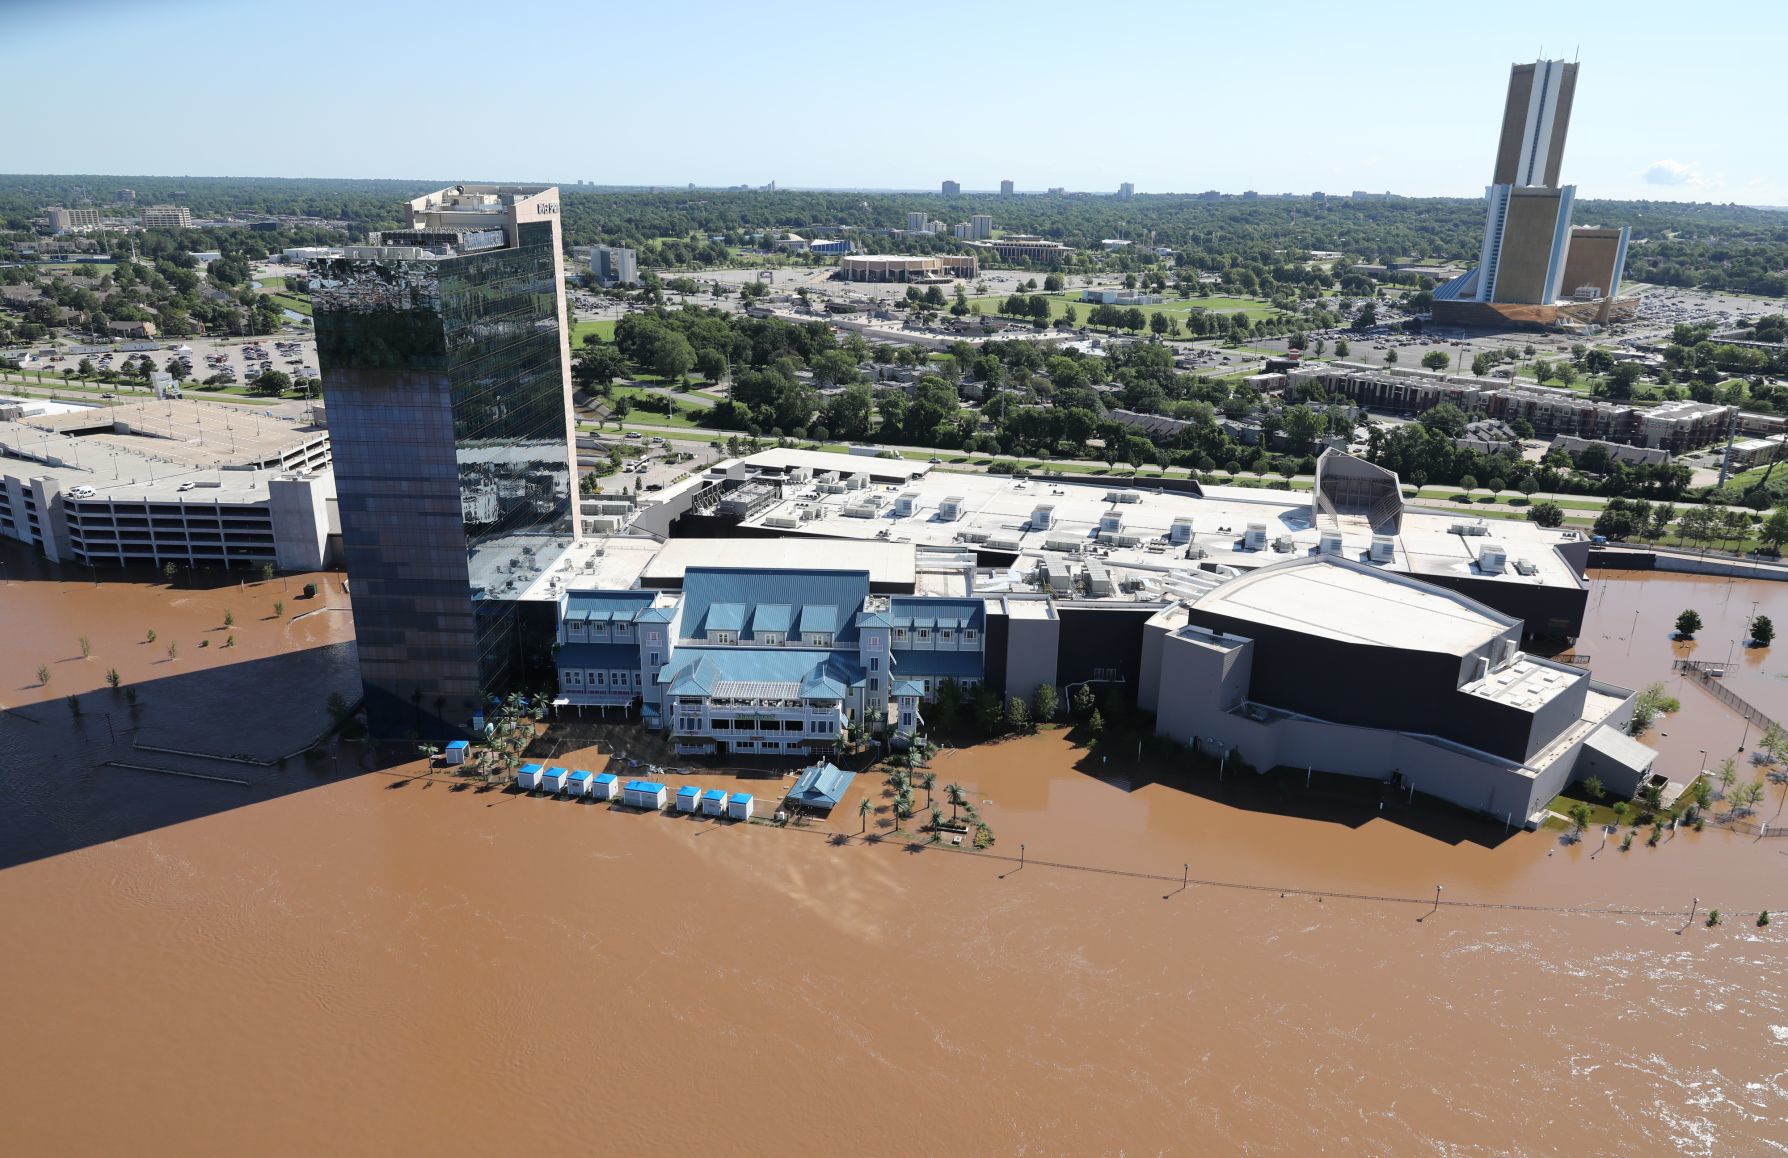 flood waters by river spirit casino tulsa